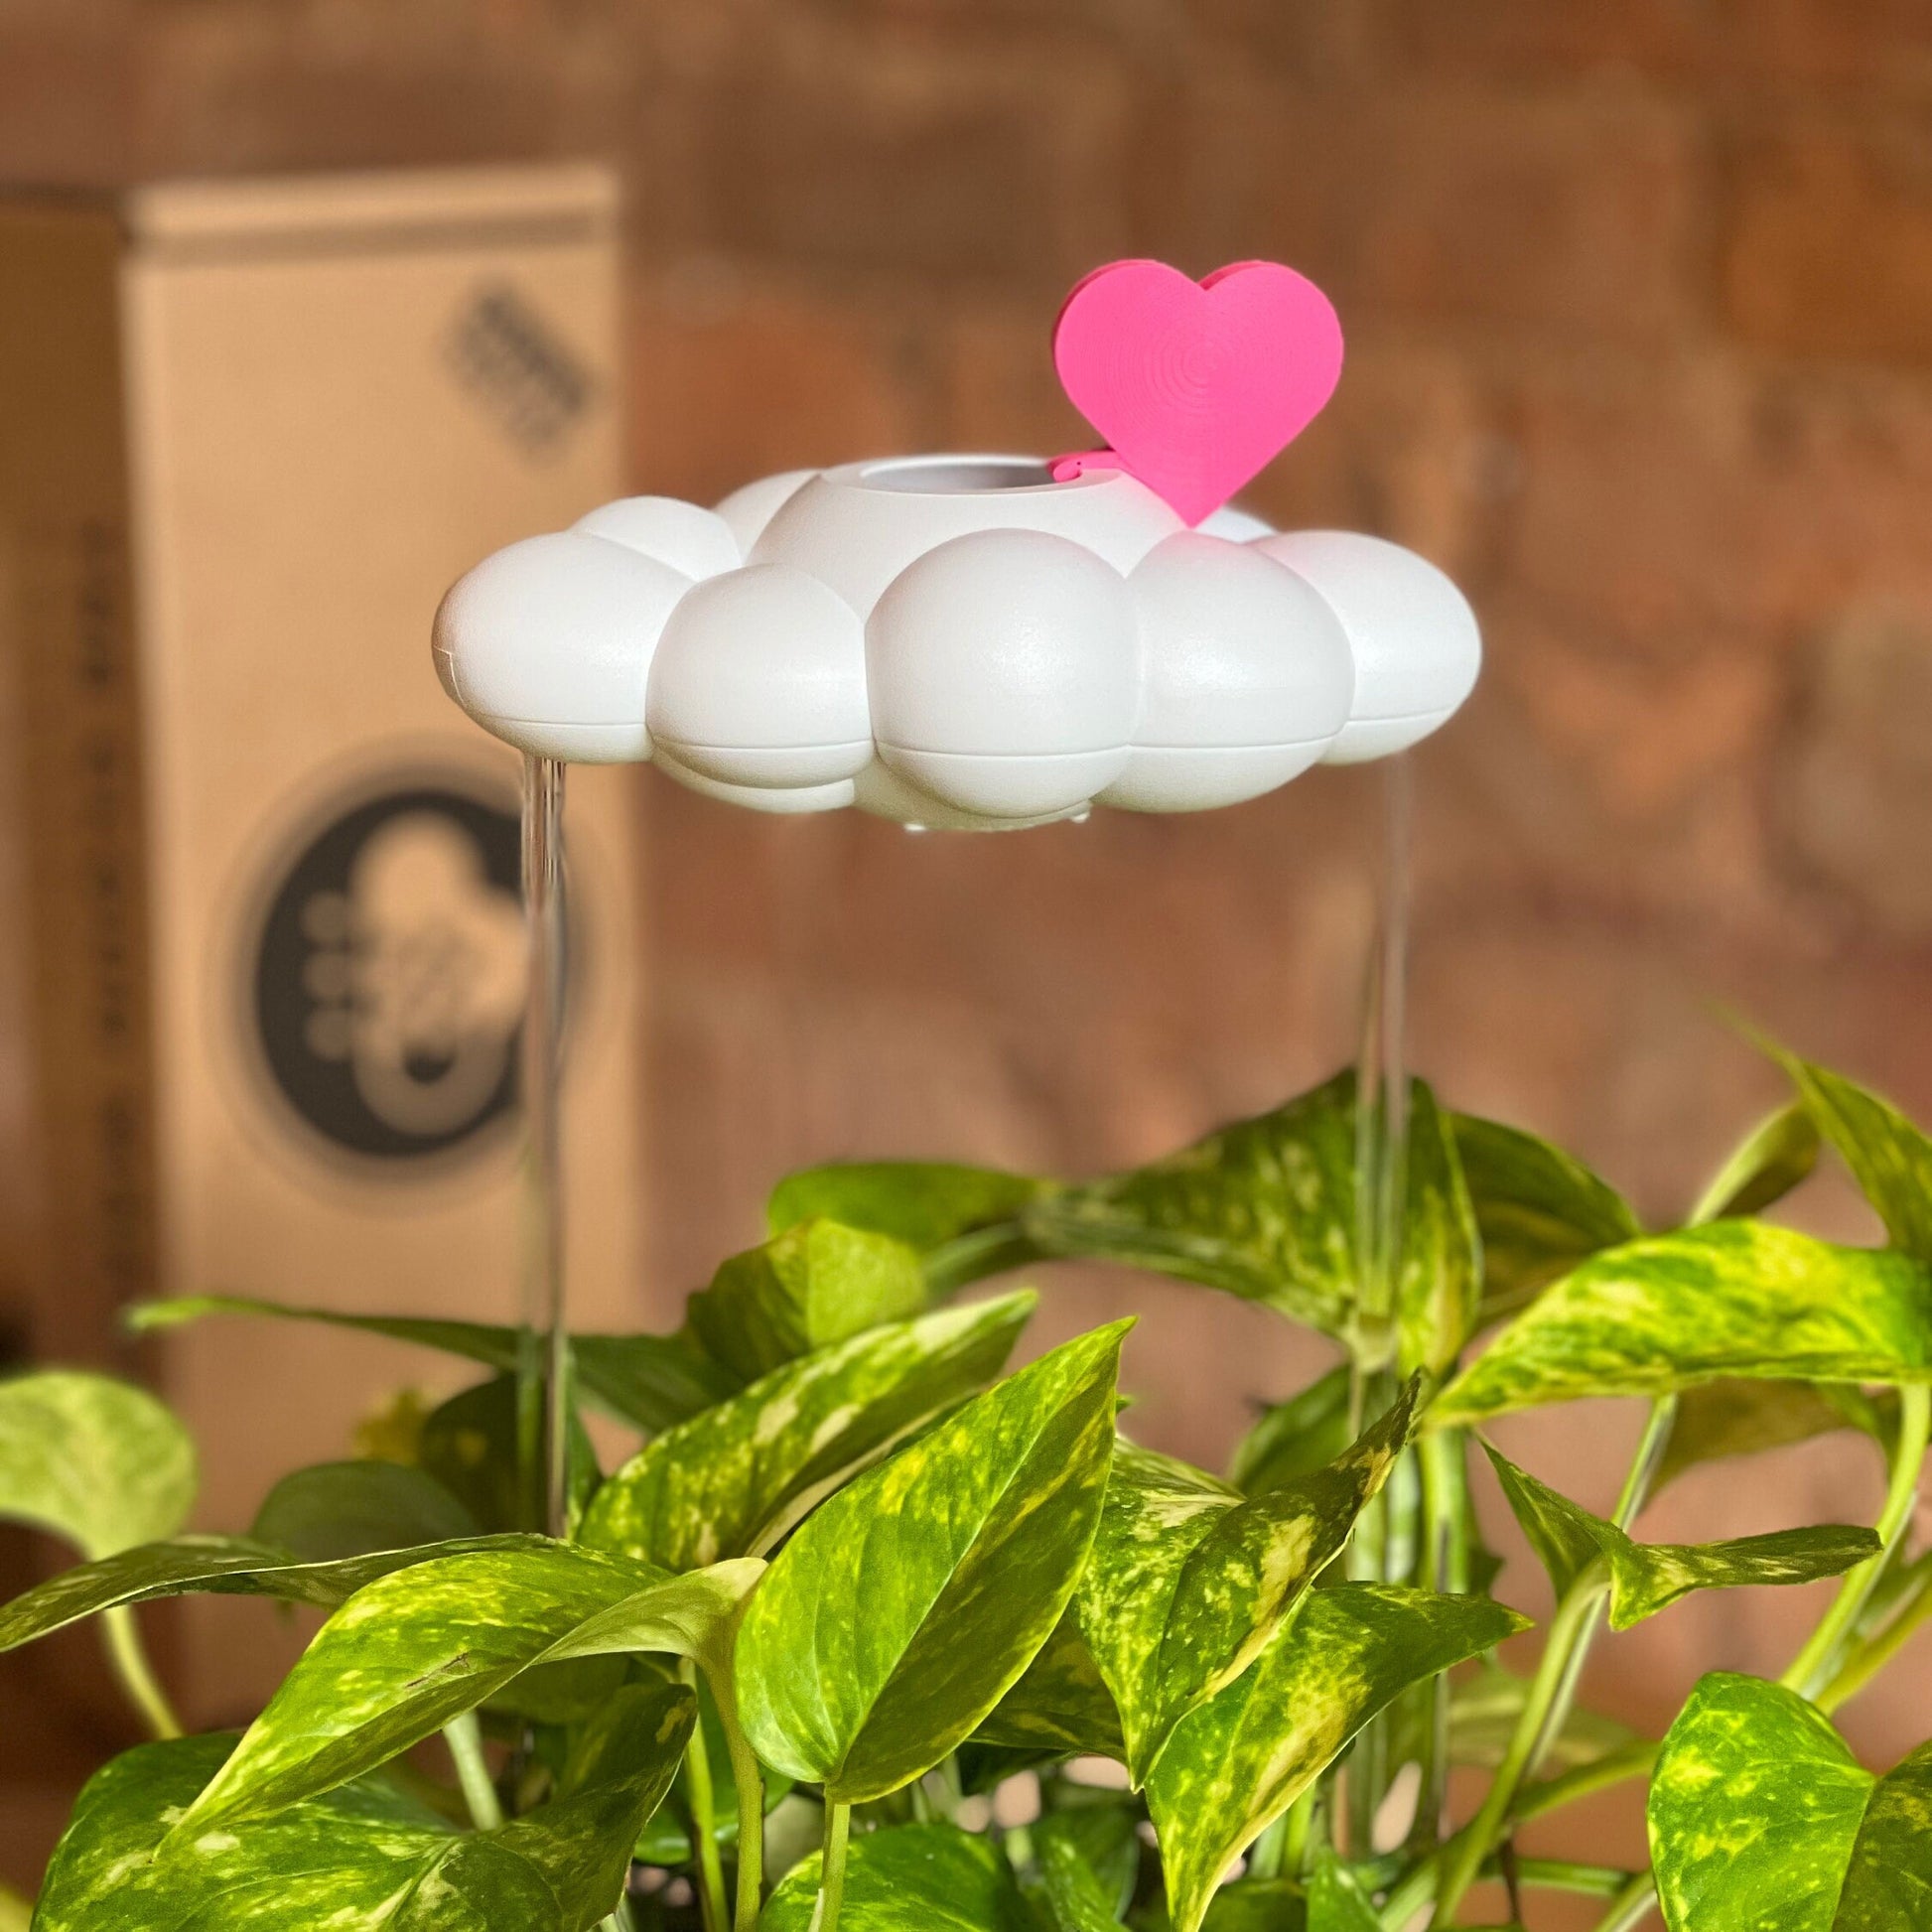 Original Dripping Rain Cloud with Pink Heart